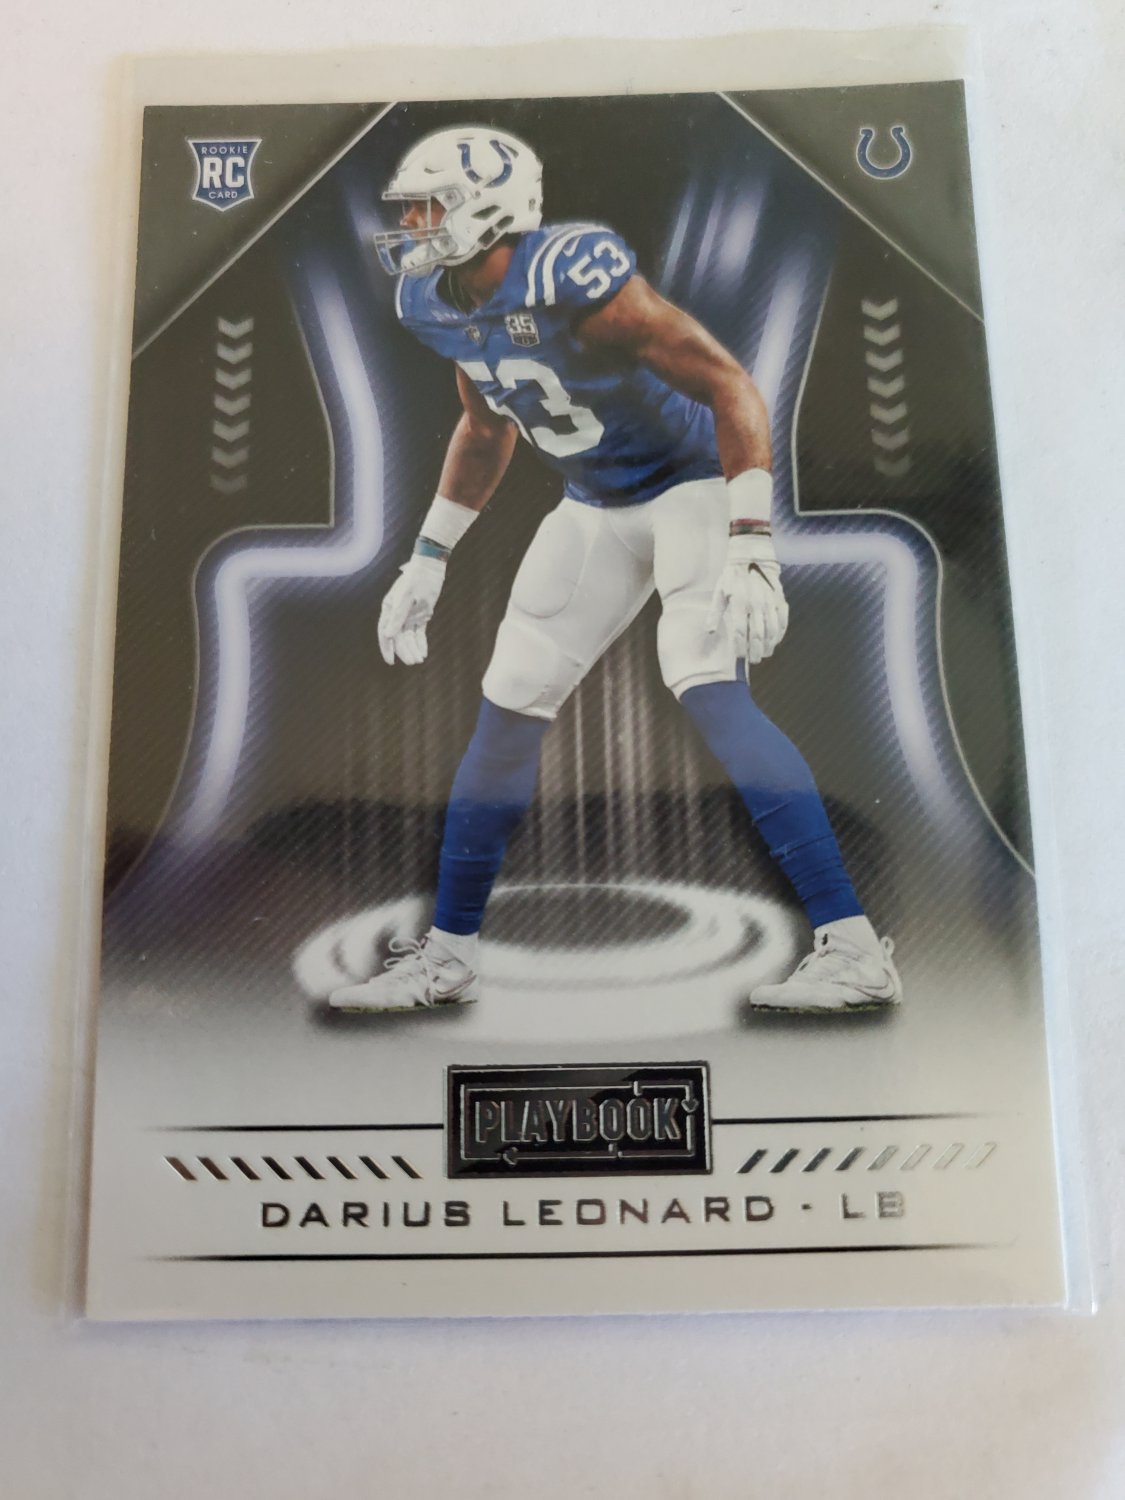 Darius Leonard 2018 Playbook Rookie Card